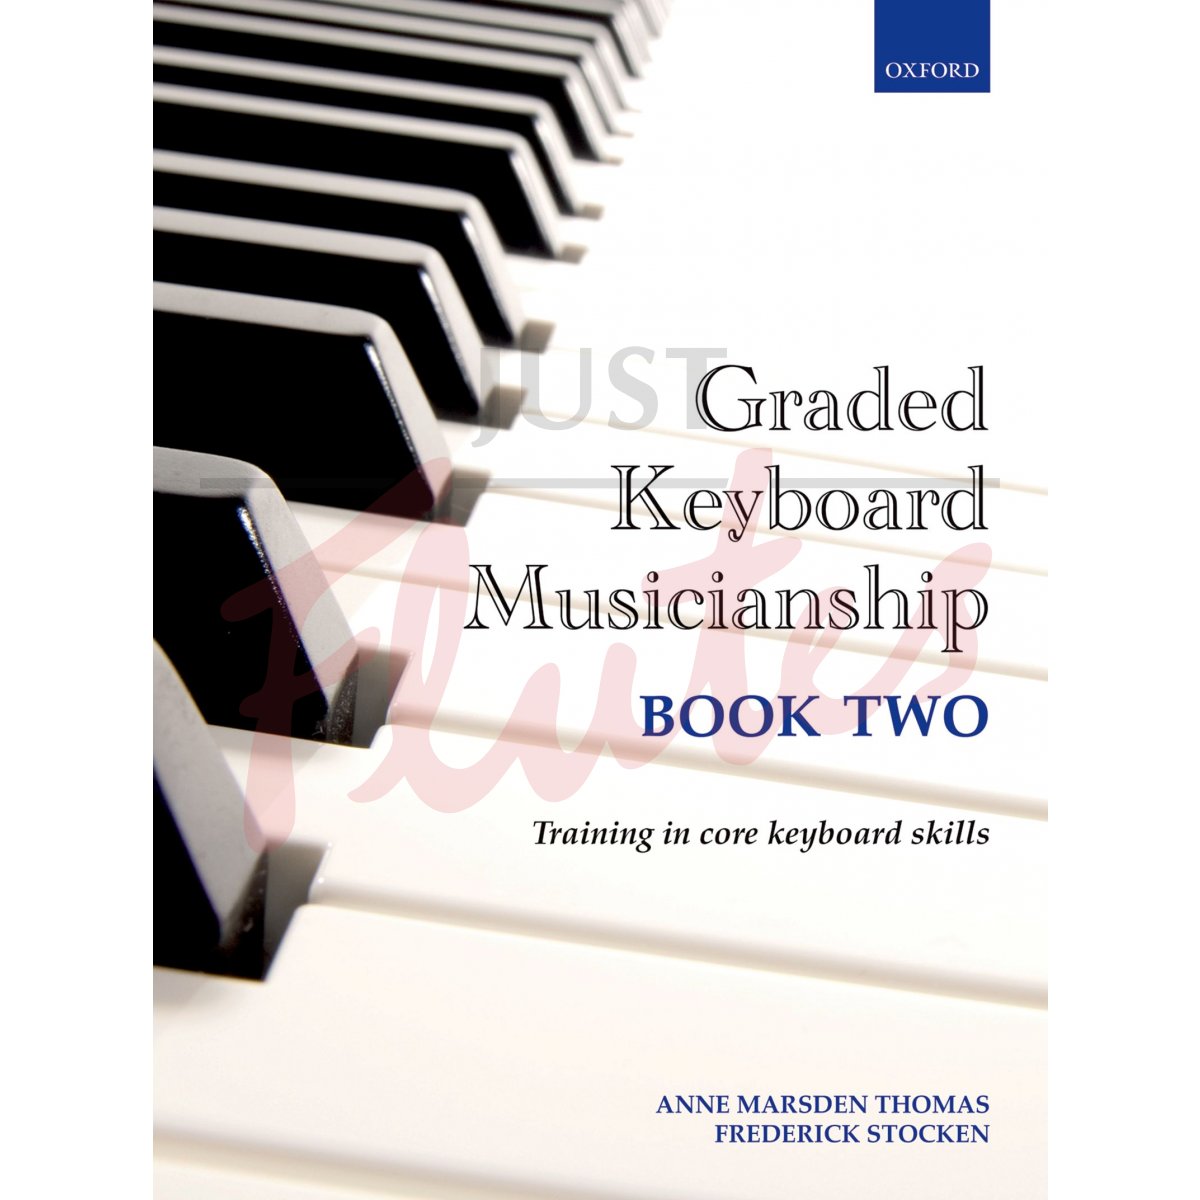 Graded Keyboard Musicianship: Training in Core Keyboard Skills Book 2